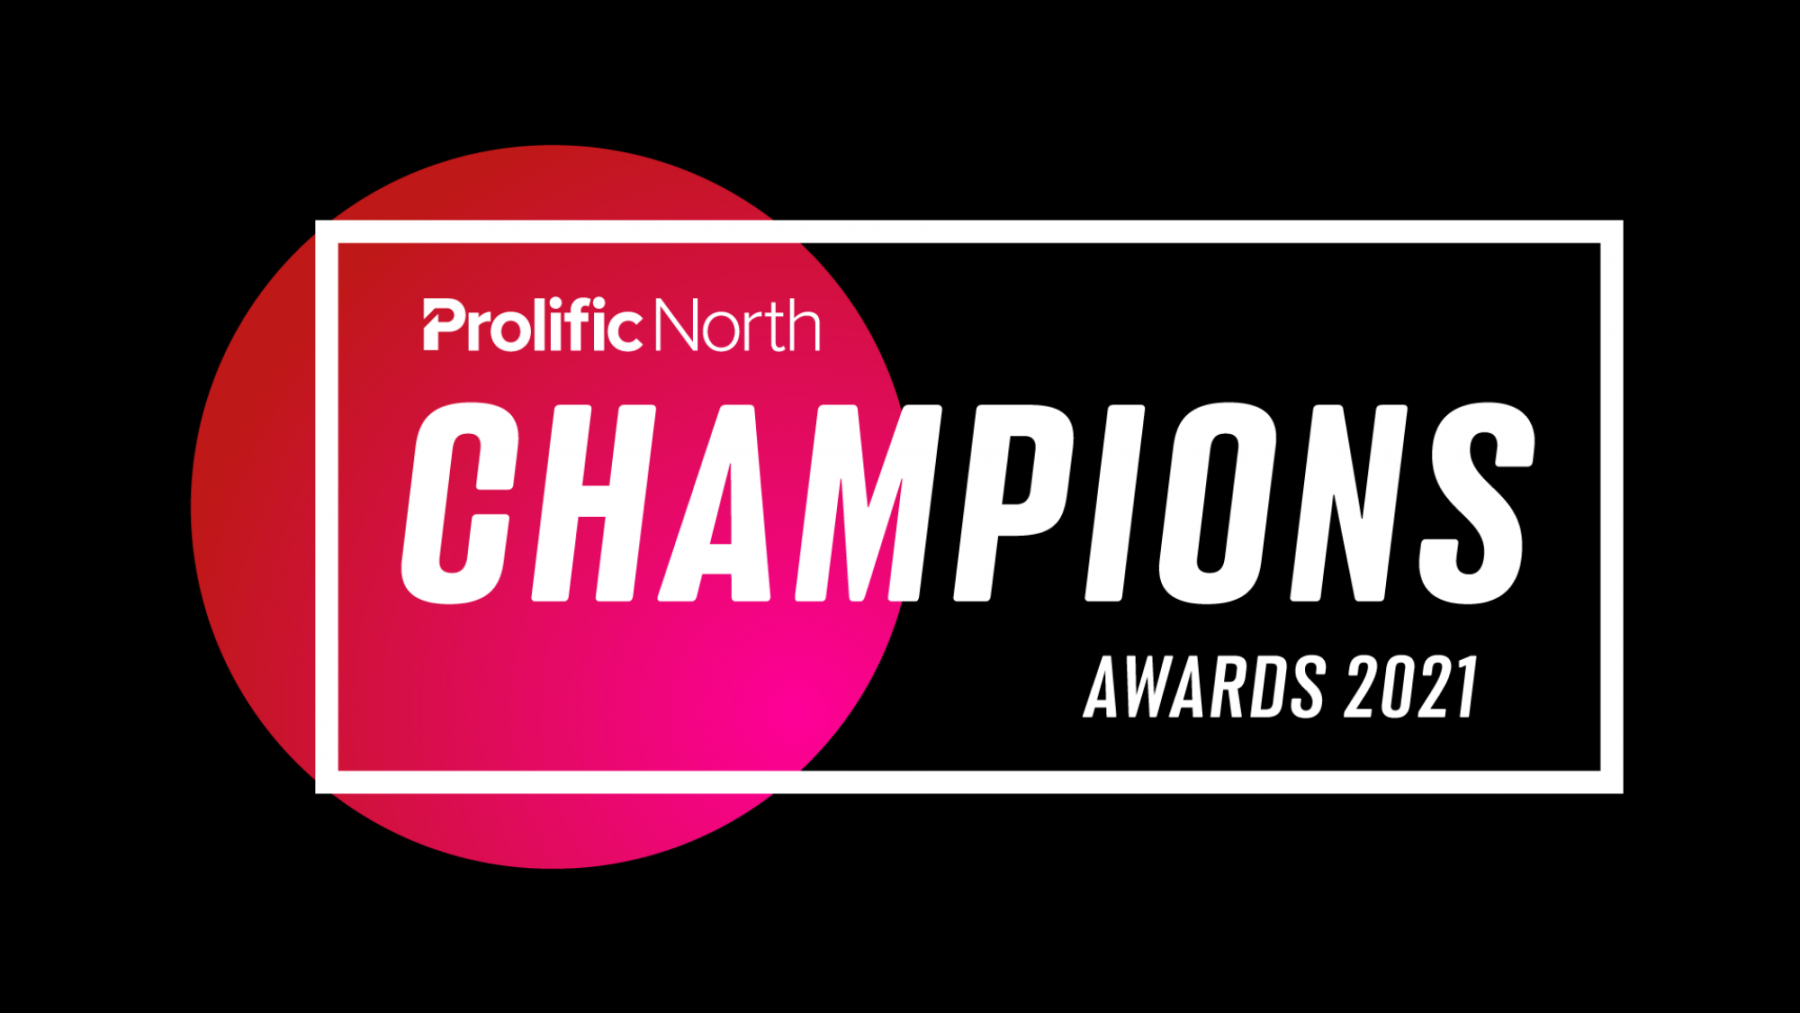 prolific-north-champions-awards-2021-logo.png